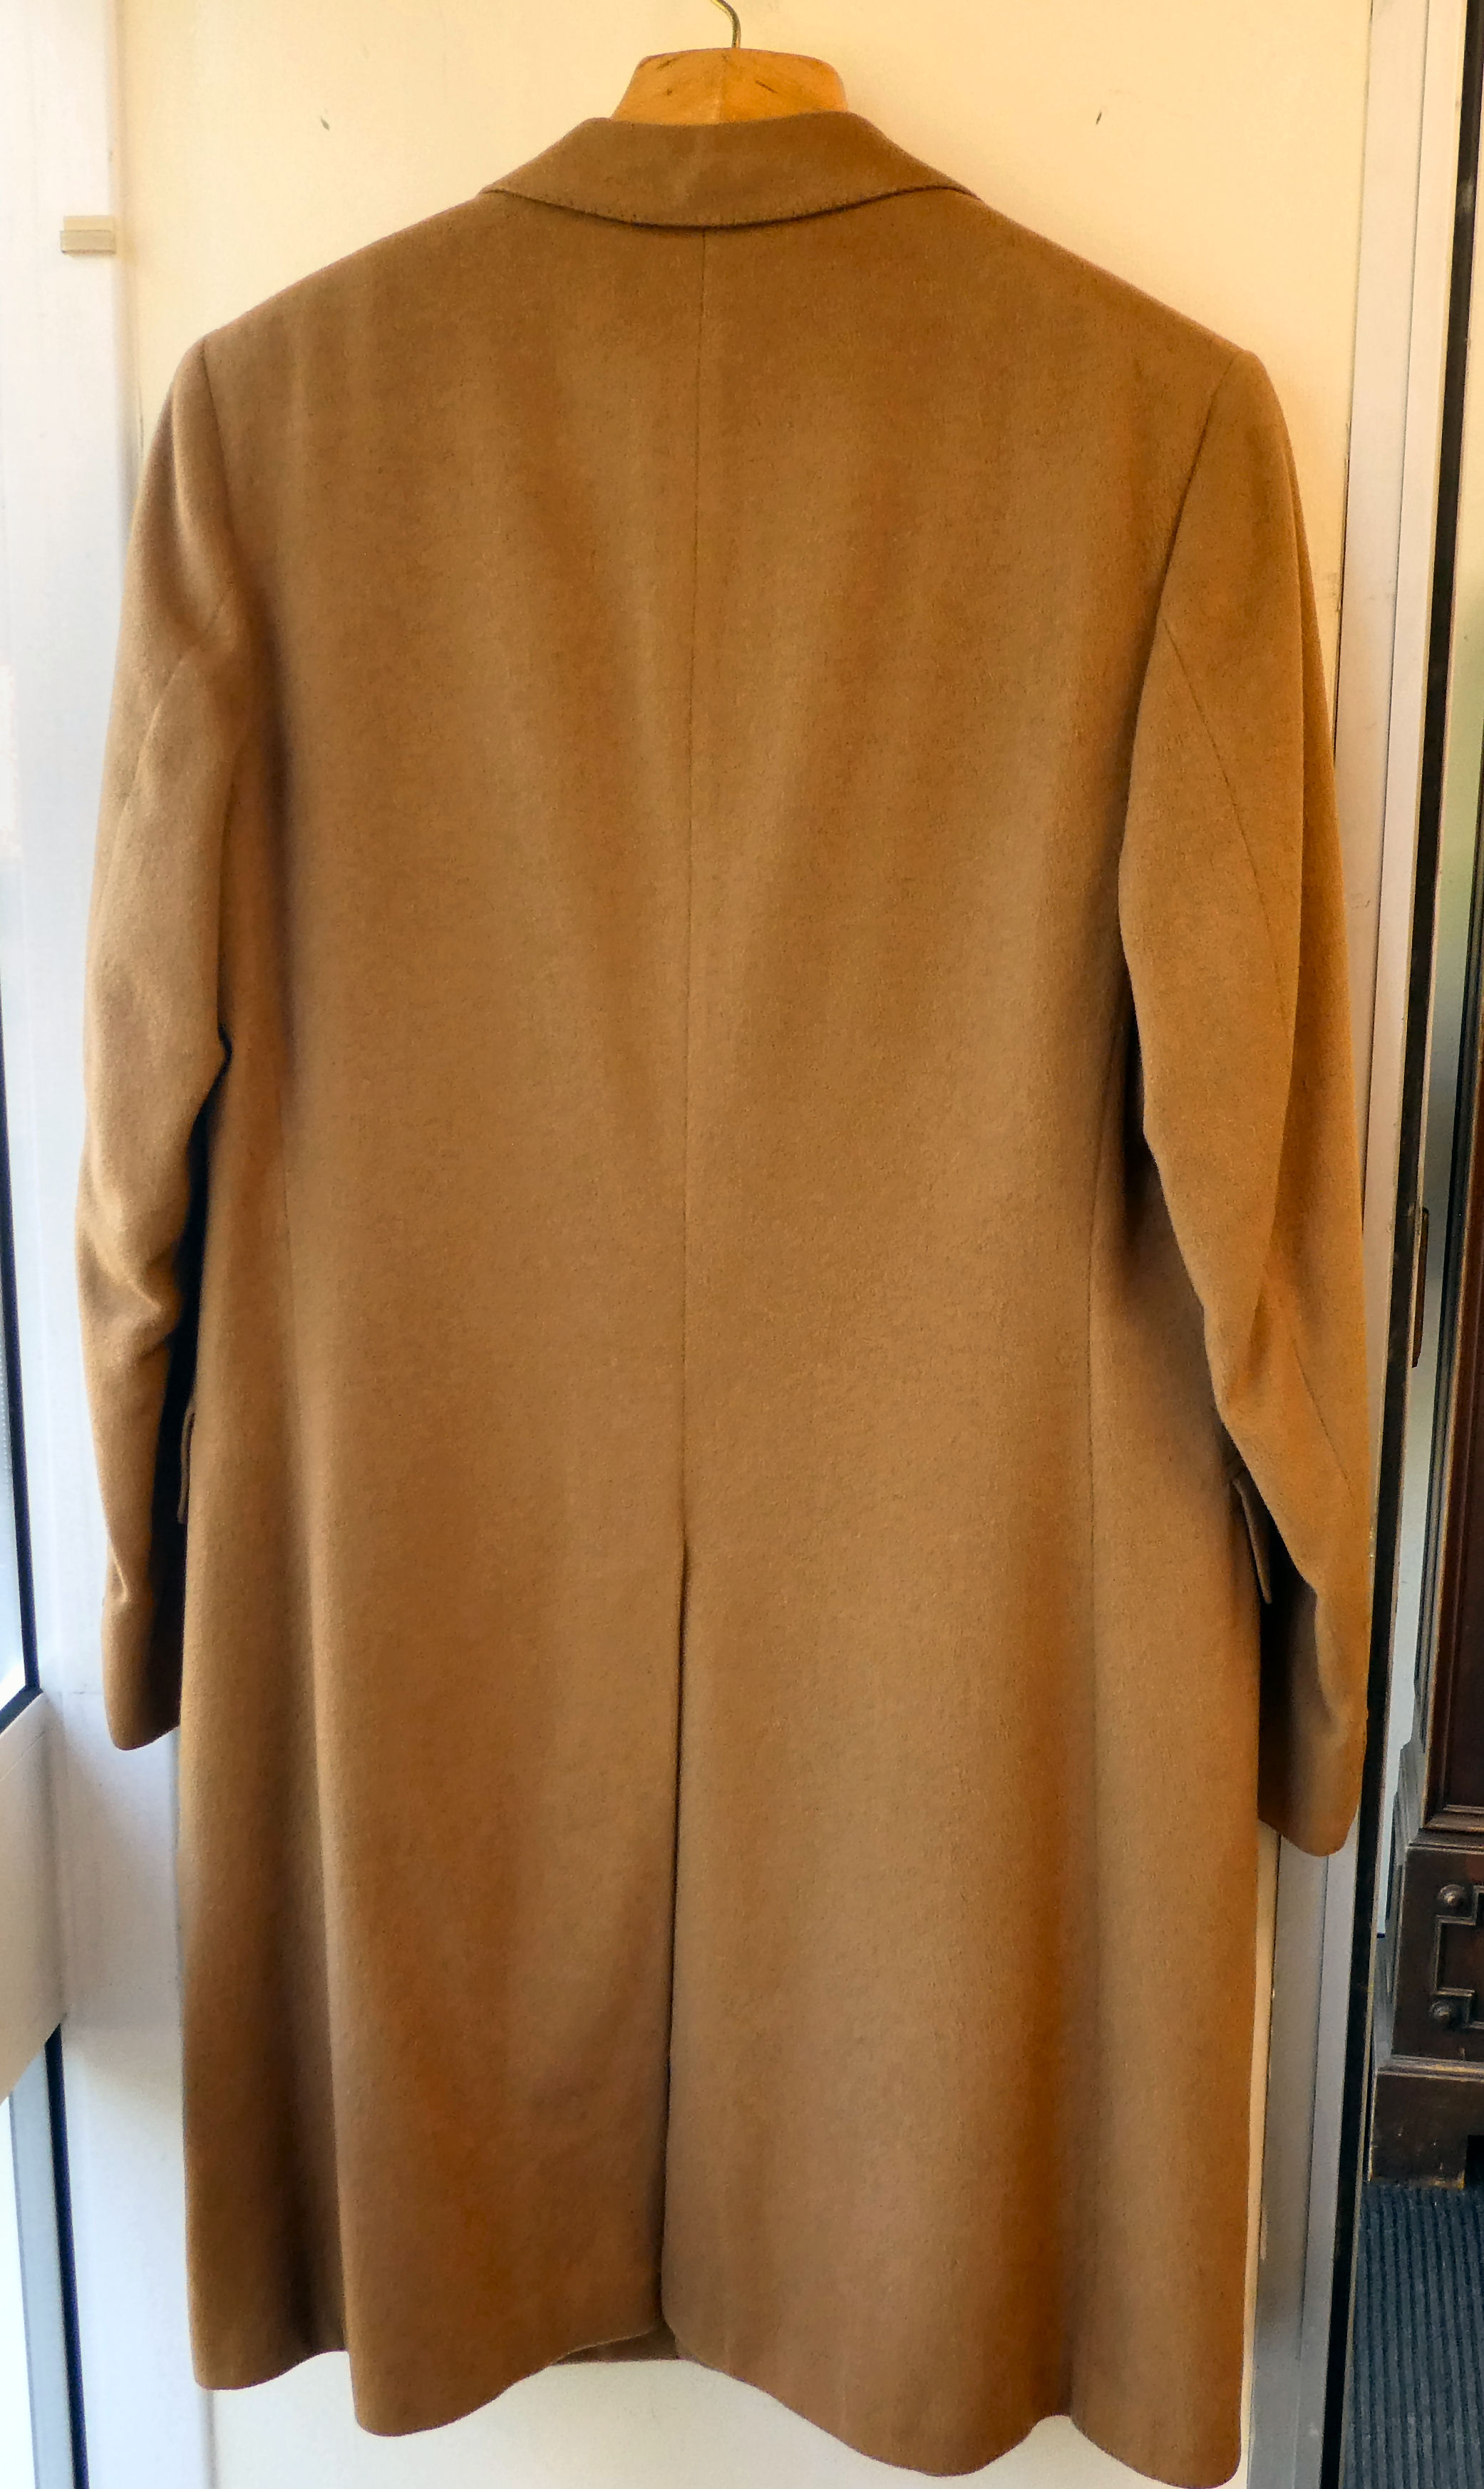 A Daks of London mans tan brown fabric three quarter length coat  approx. size 44" regular/large - Image 5 of 5